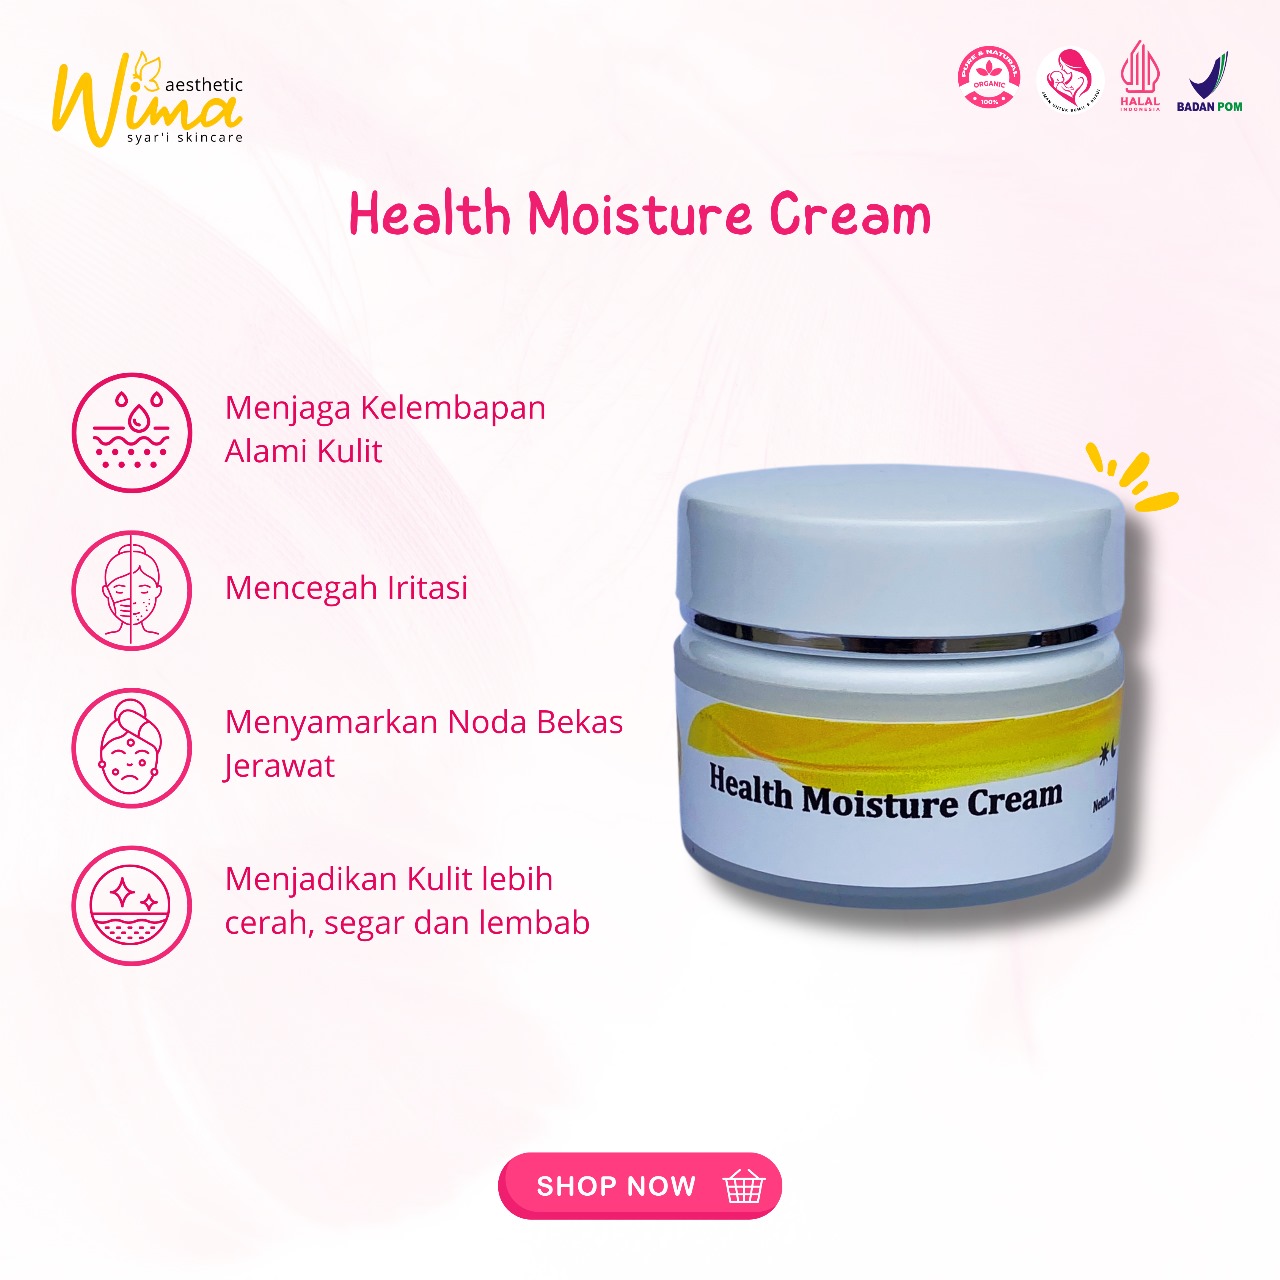 manfaat wima health moisture cream